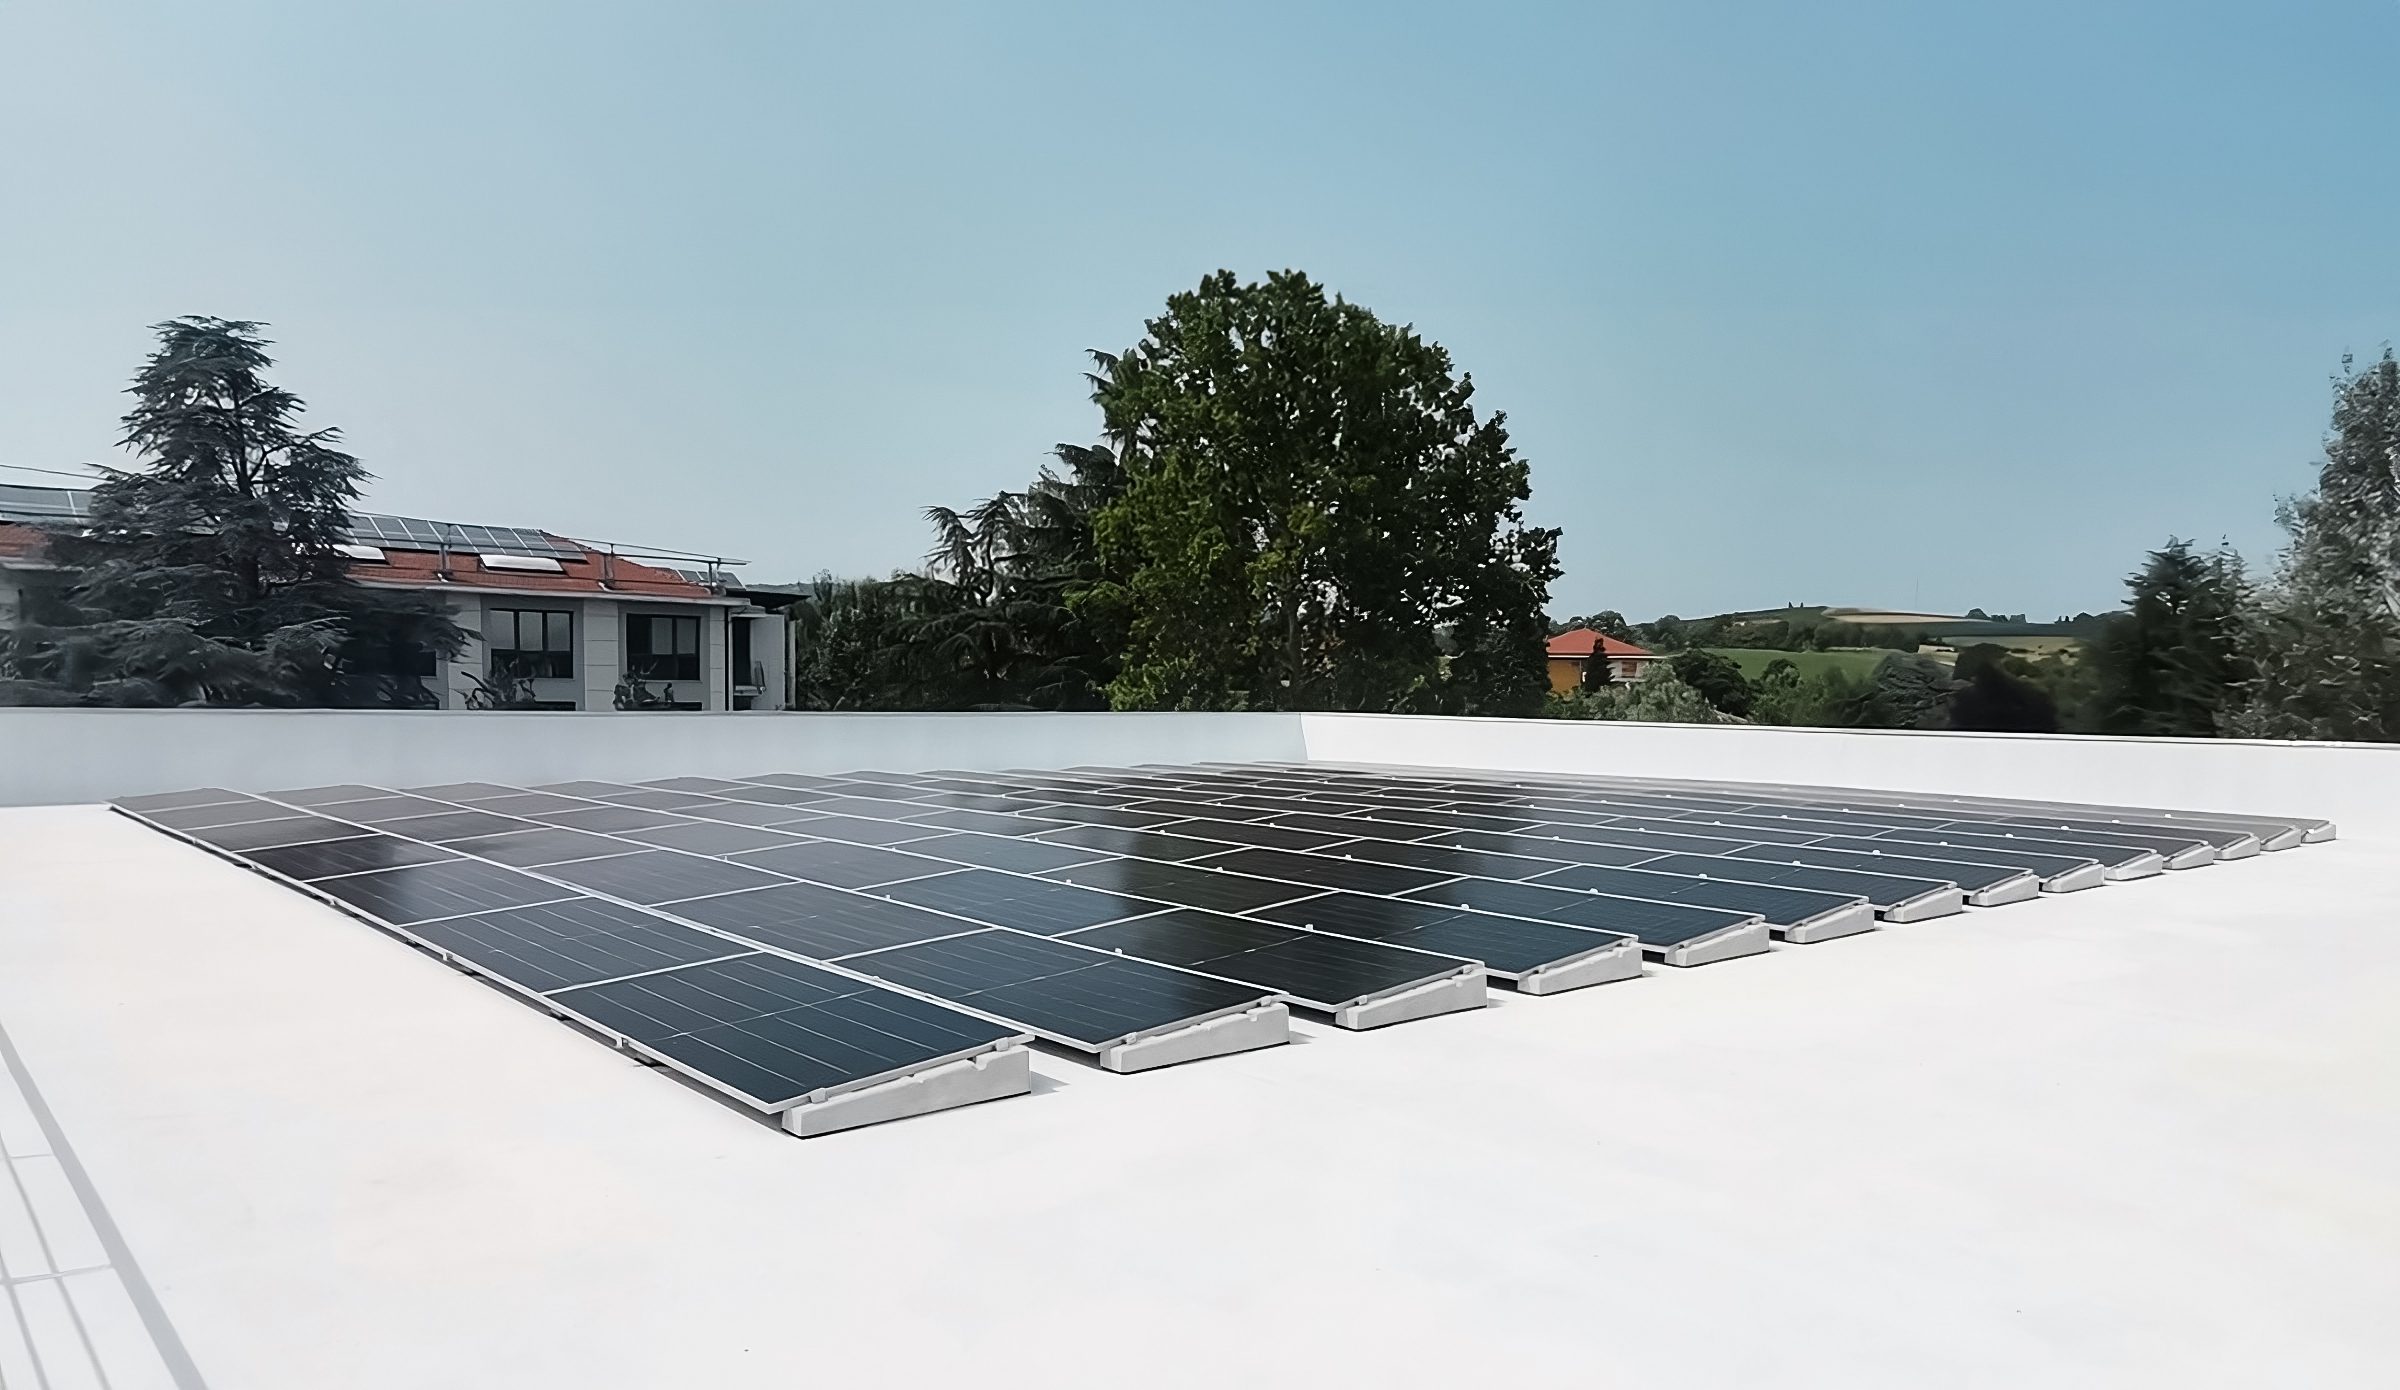 Photovoltaic Systems Srl - Torino - Italy